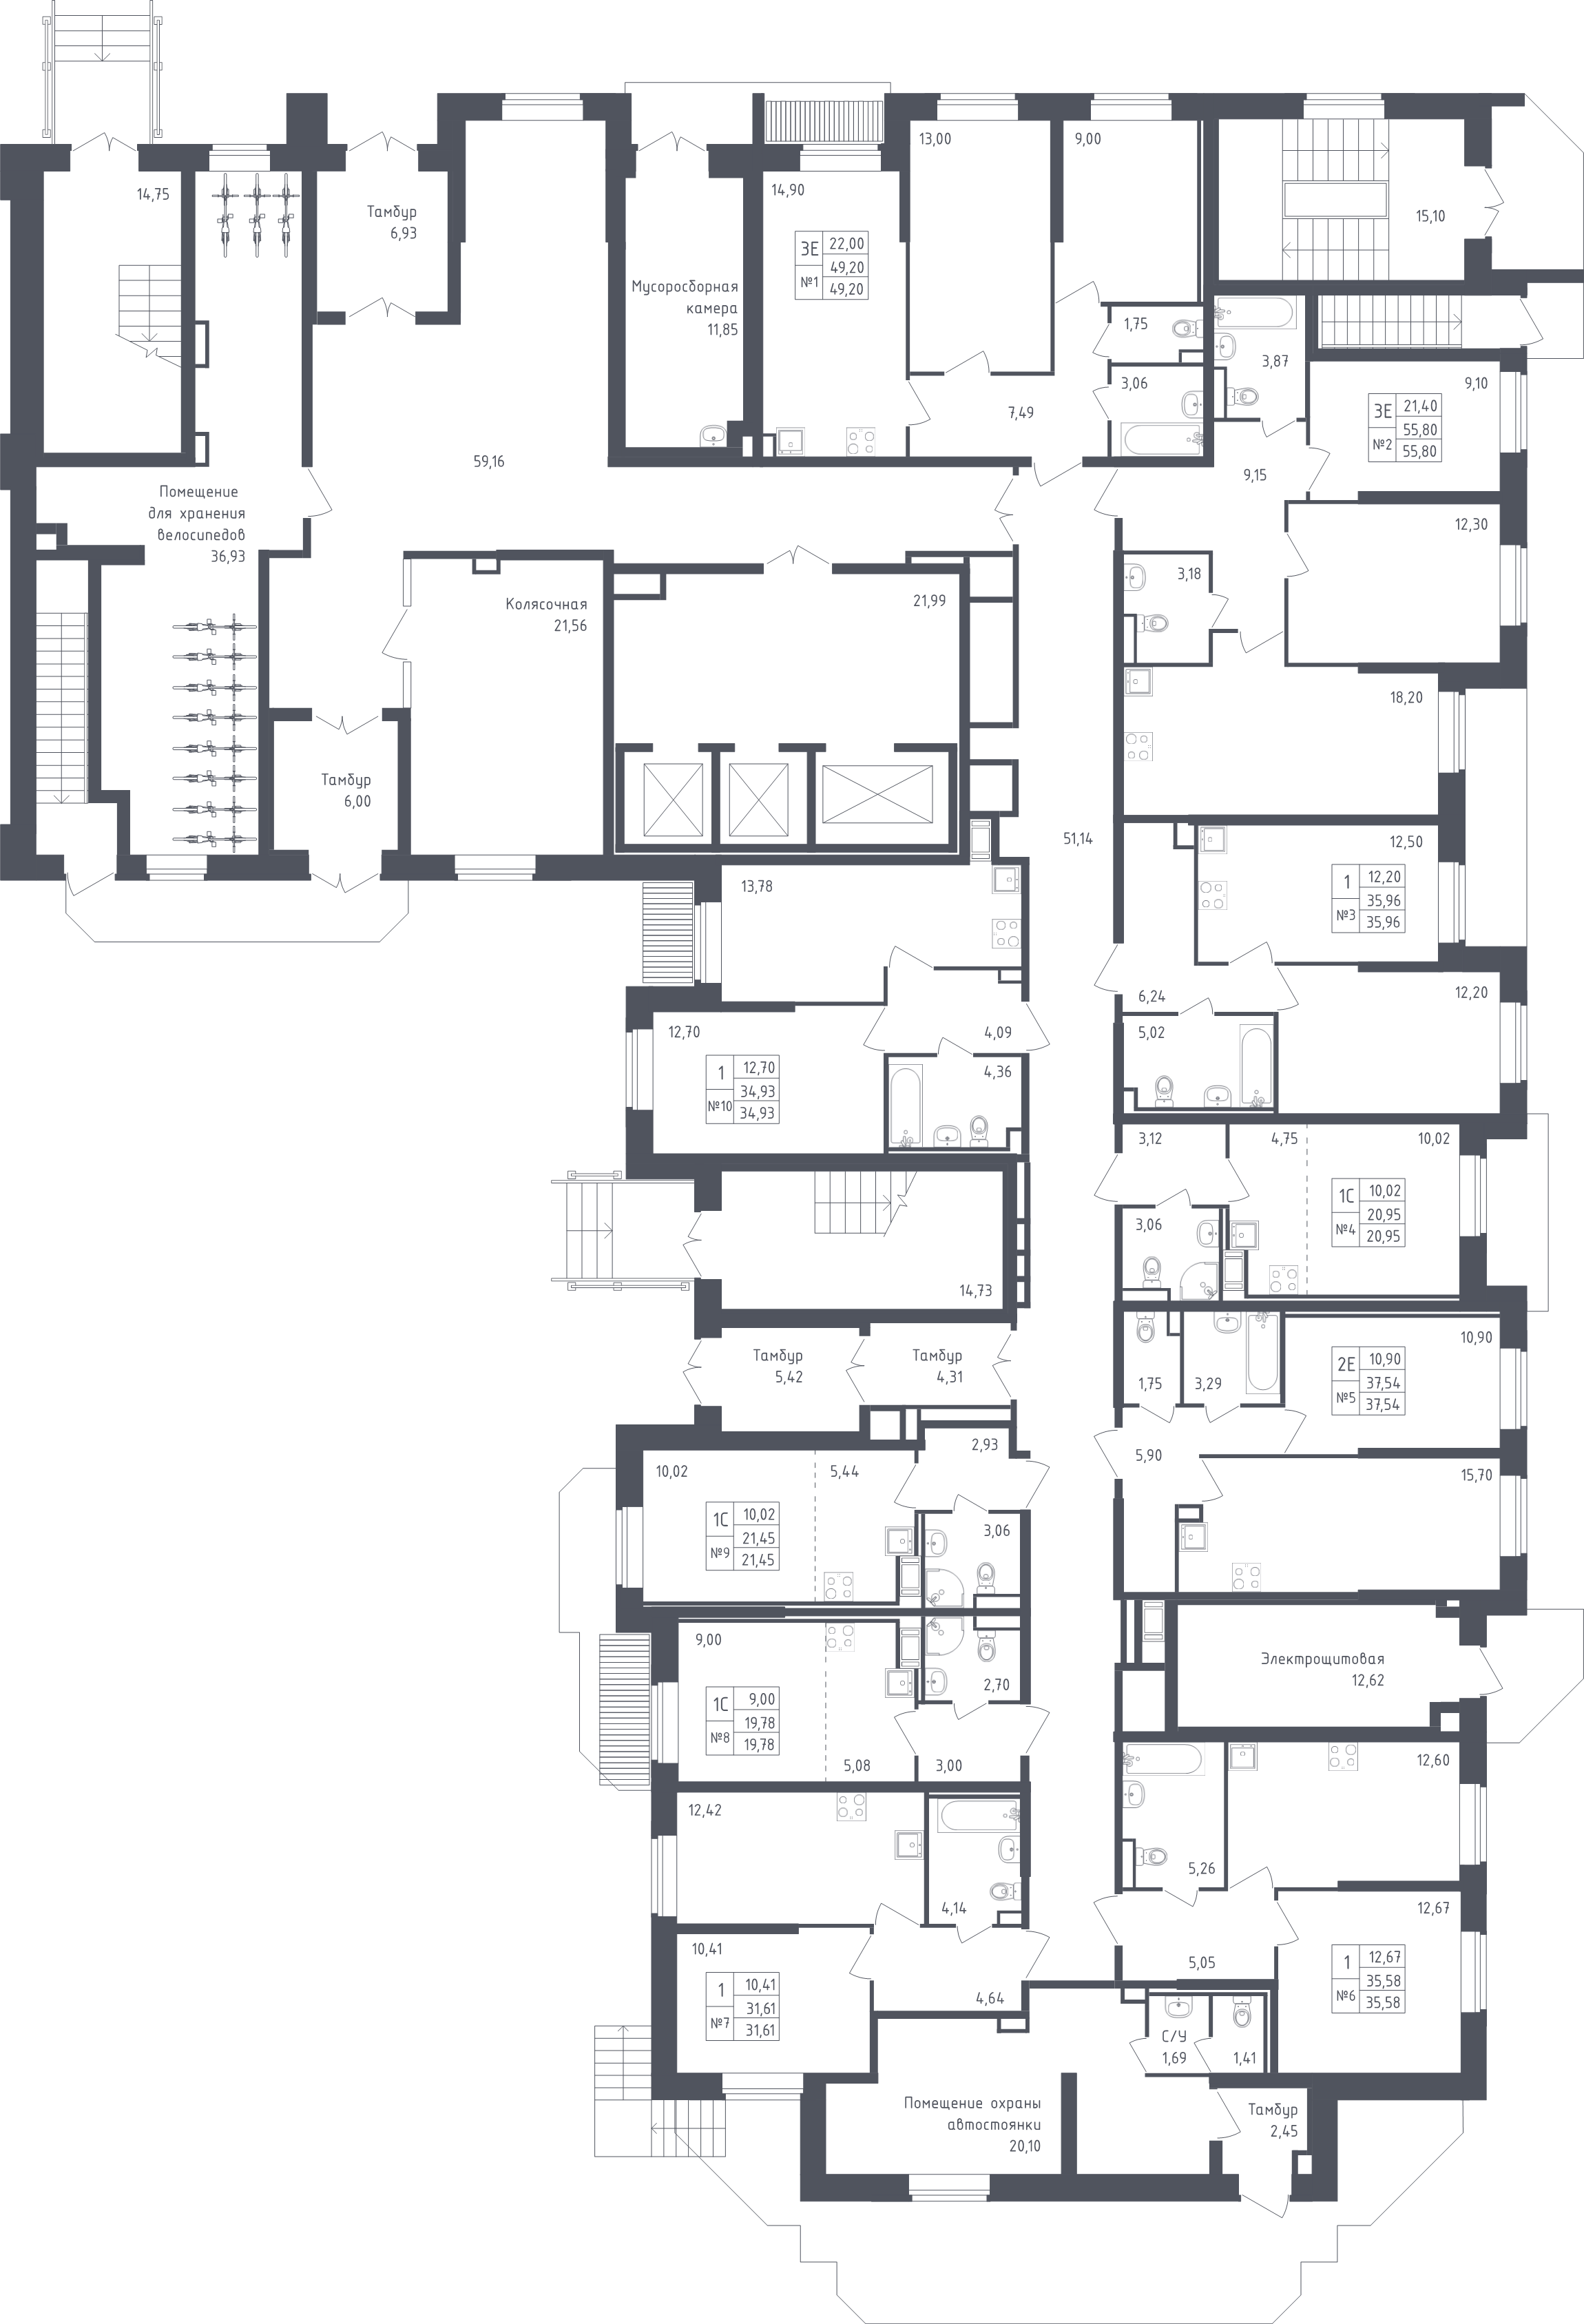 2-комнатная (Евро) квартира, 37.54 м² - планировка этажа